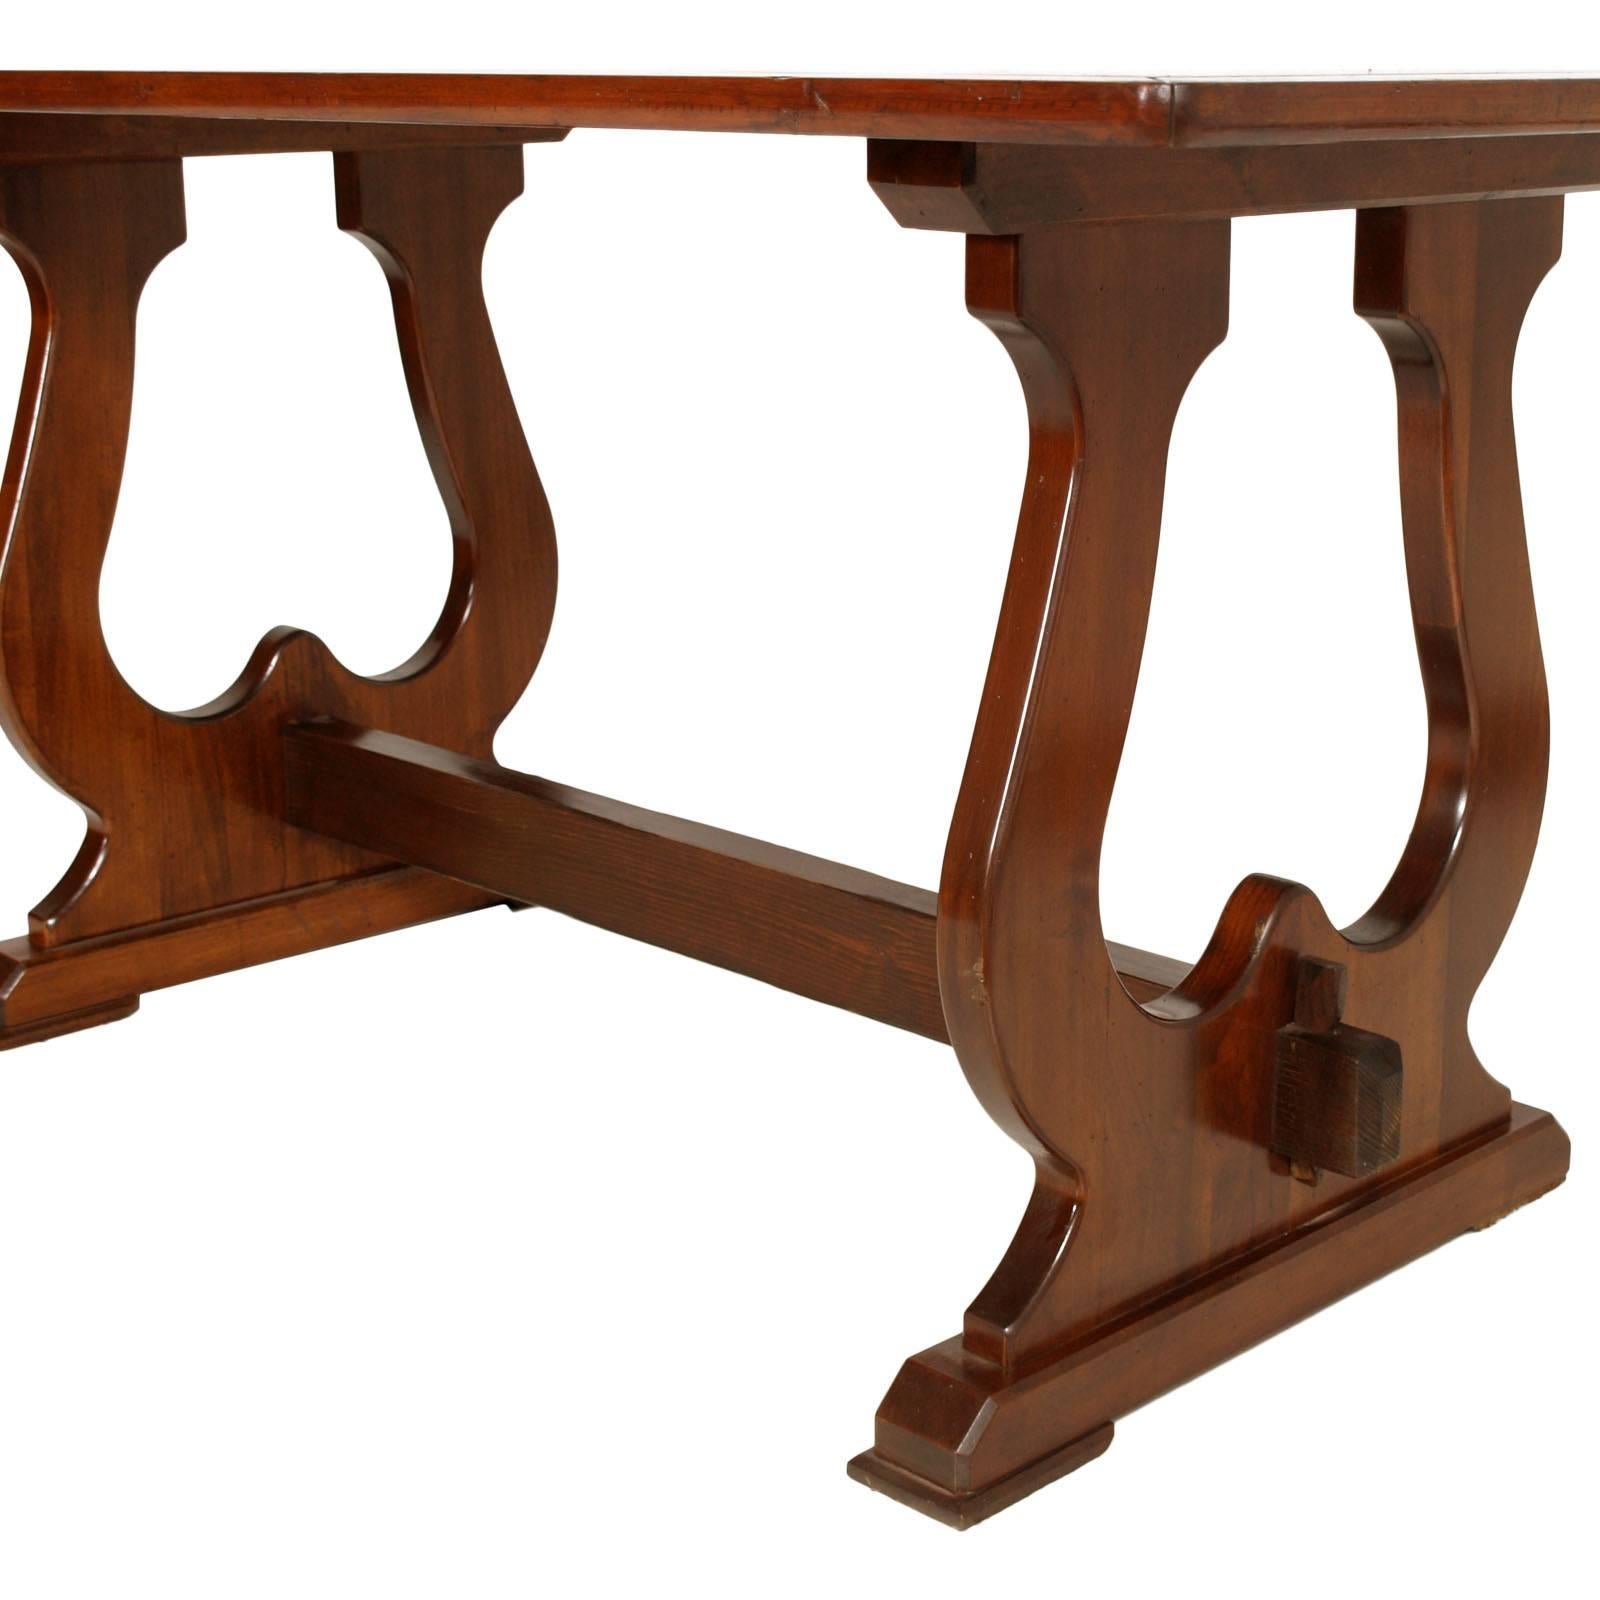 Renaissance Revival Era Art Deco Elegant Italian Frattino Table All Massive Oak Polished to Wax For Sale